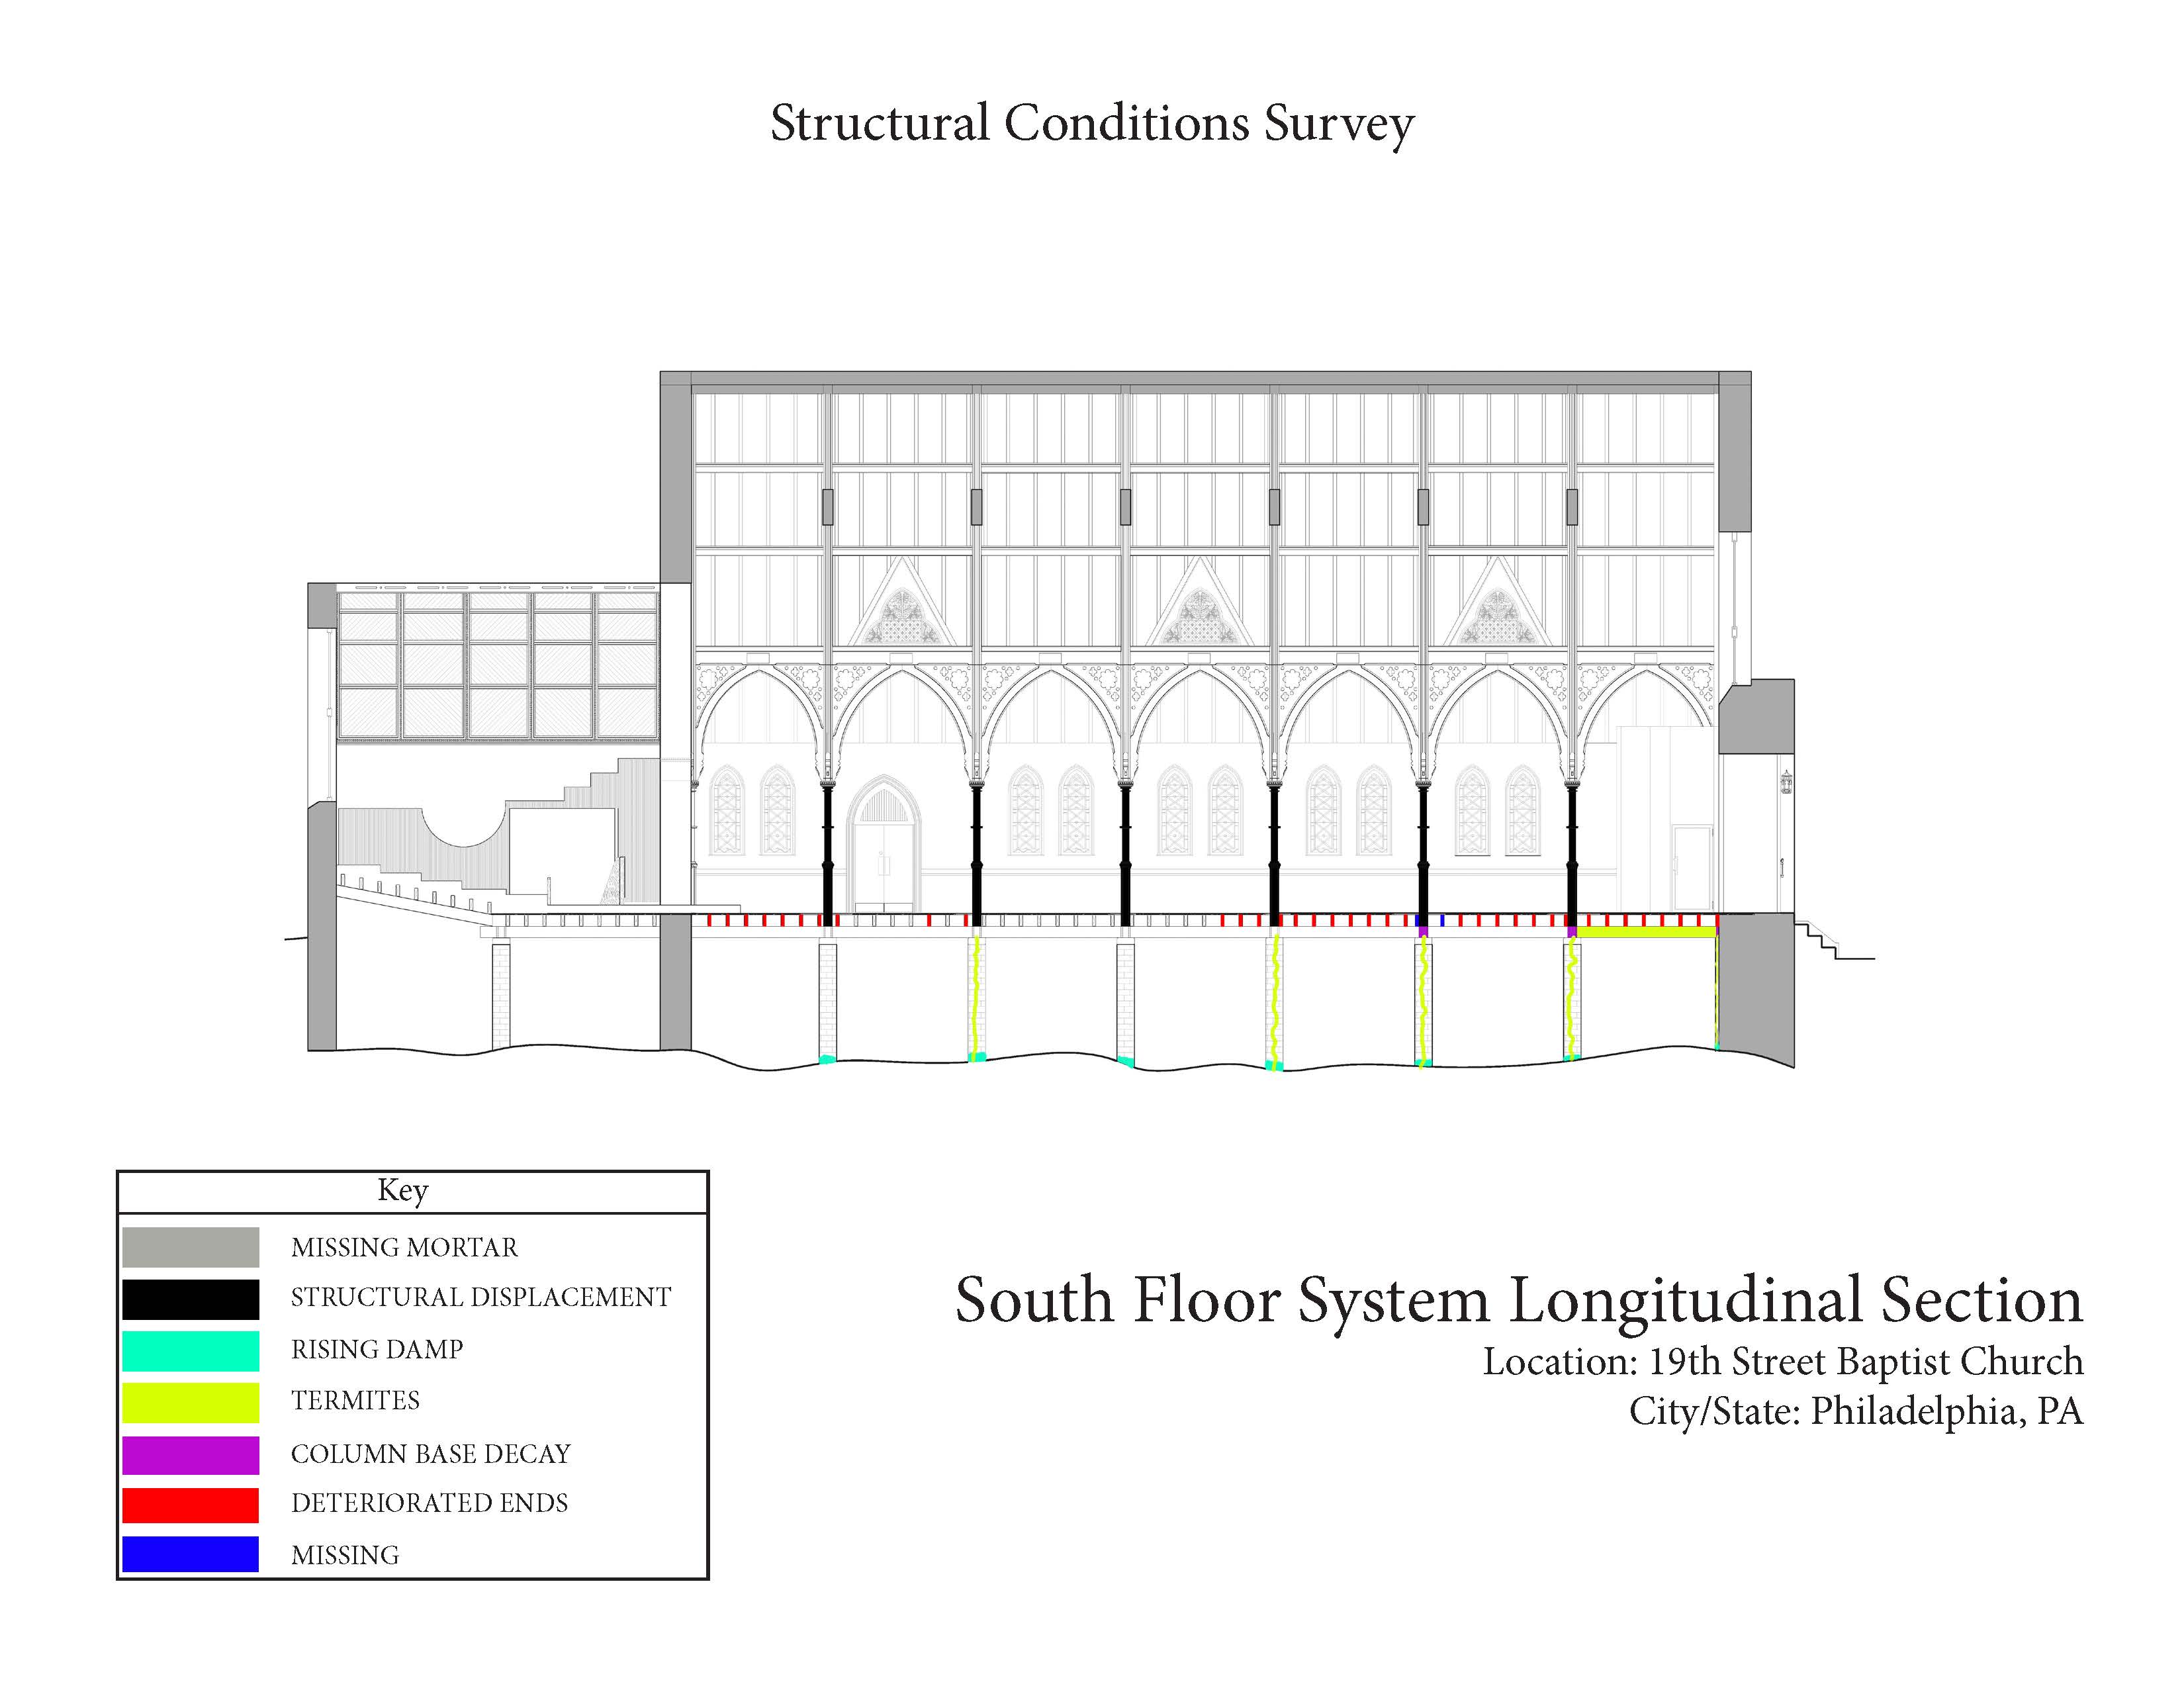 South Floor System, Longitudinal Section, 19th Street Baptist Church | PennDesign, Graduate Program in Historic Preservation